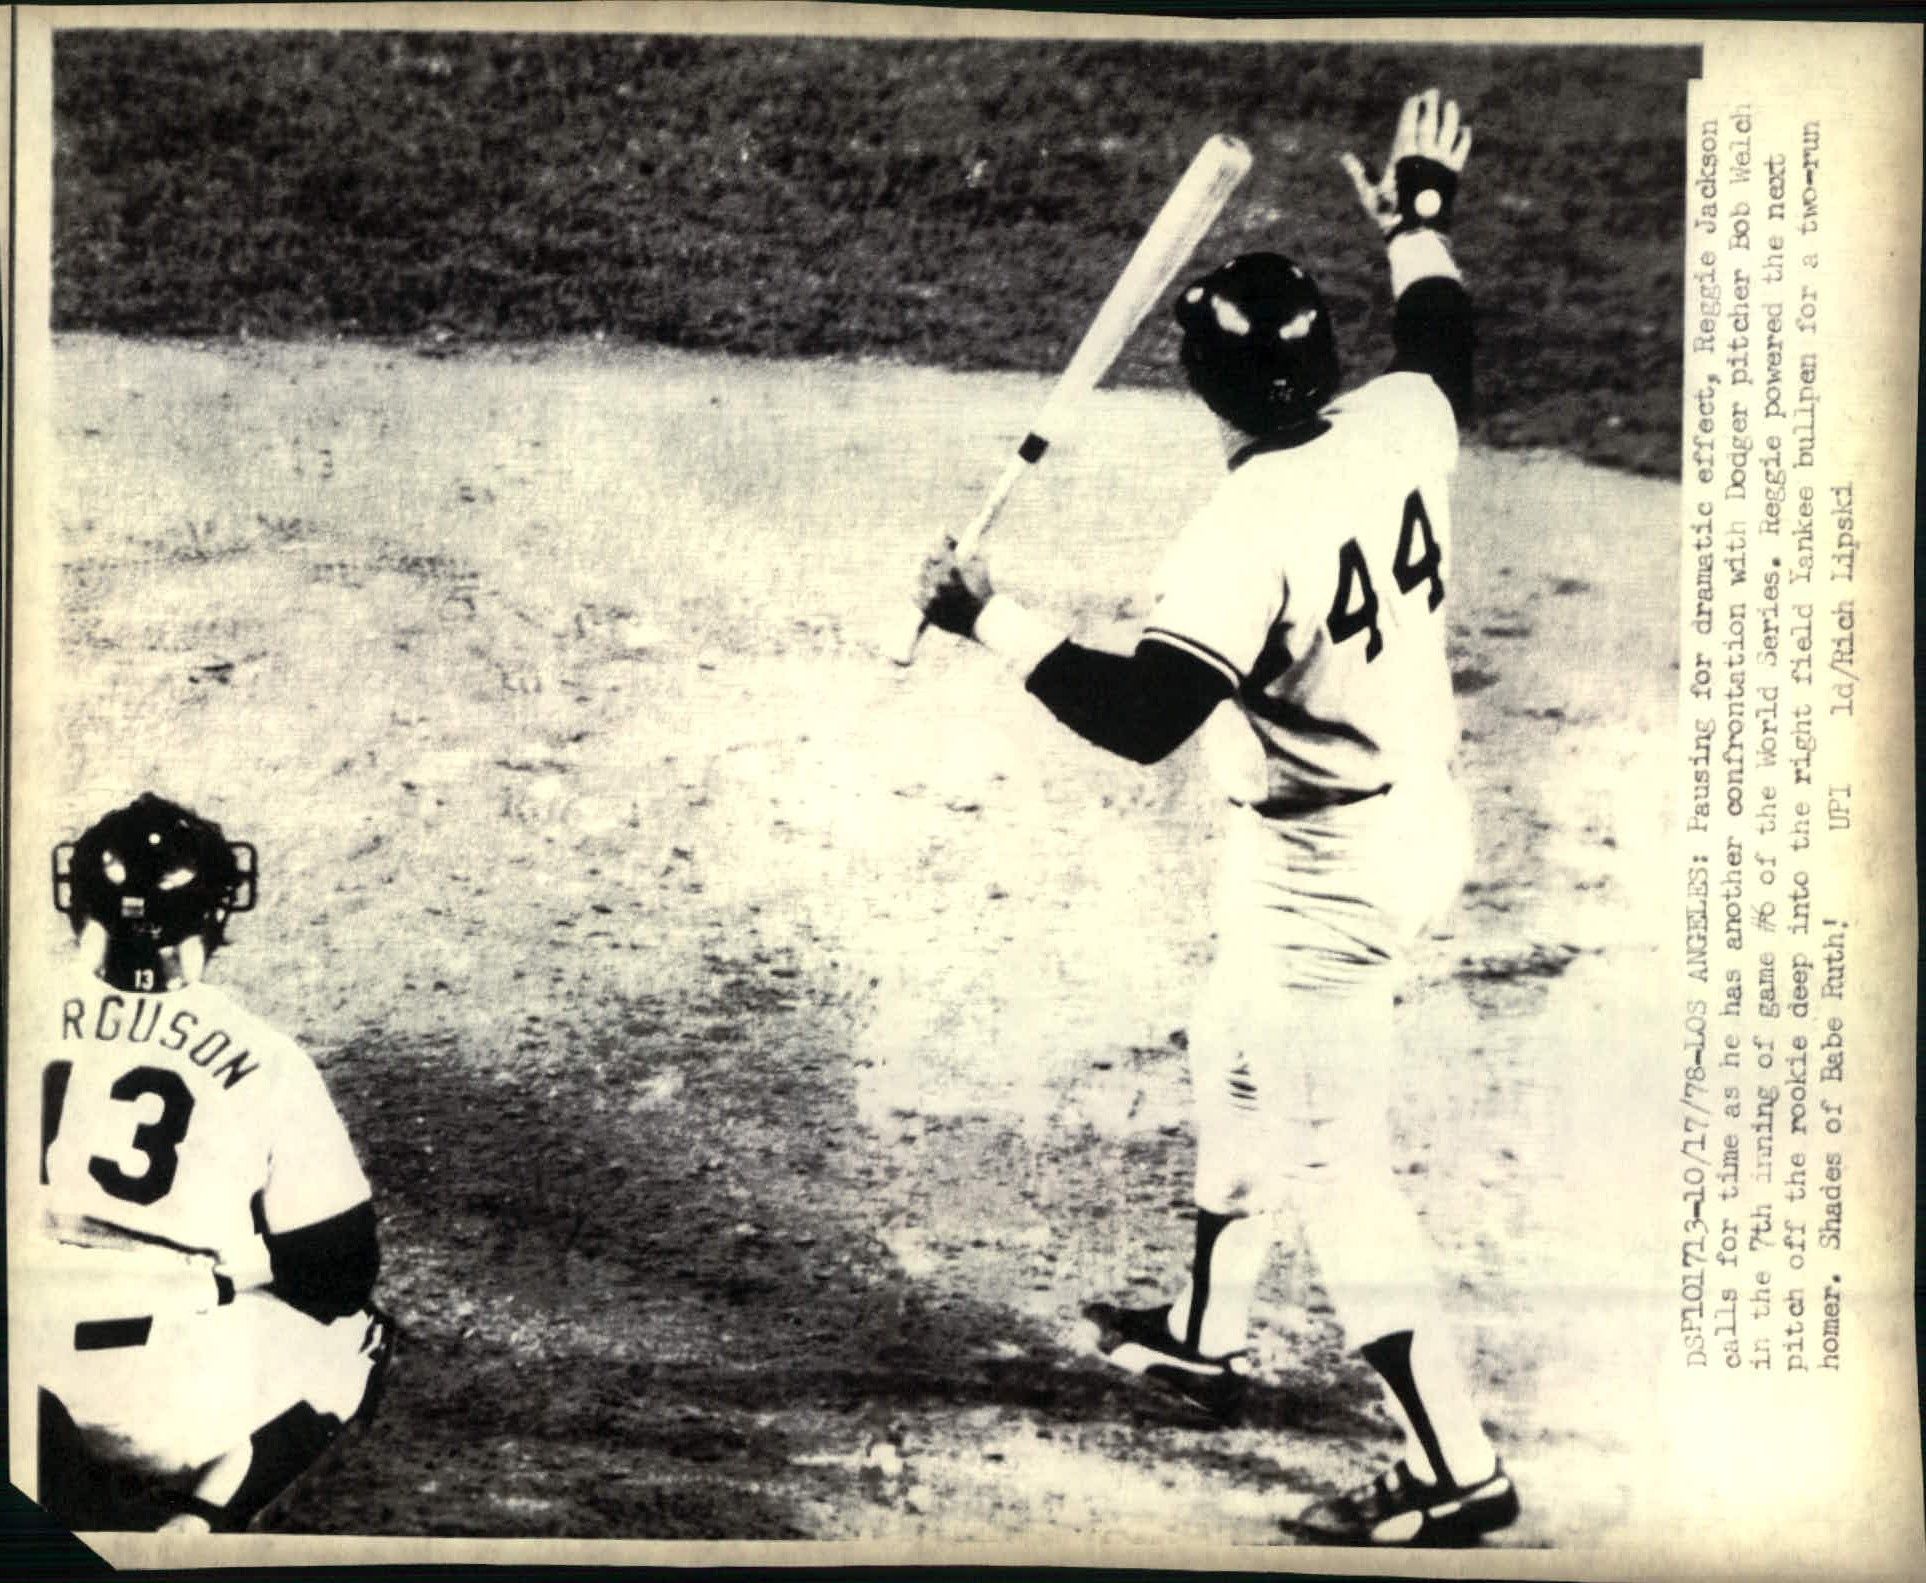 1978 LOS ANGELES DODGERS Print Vintage Baseball Poster 